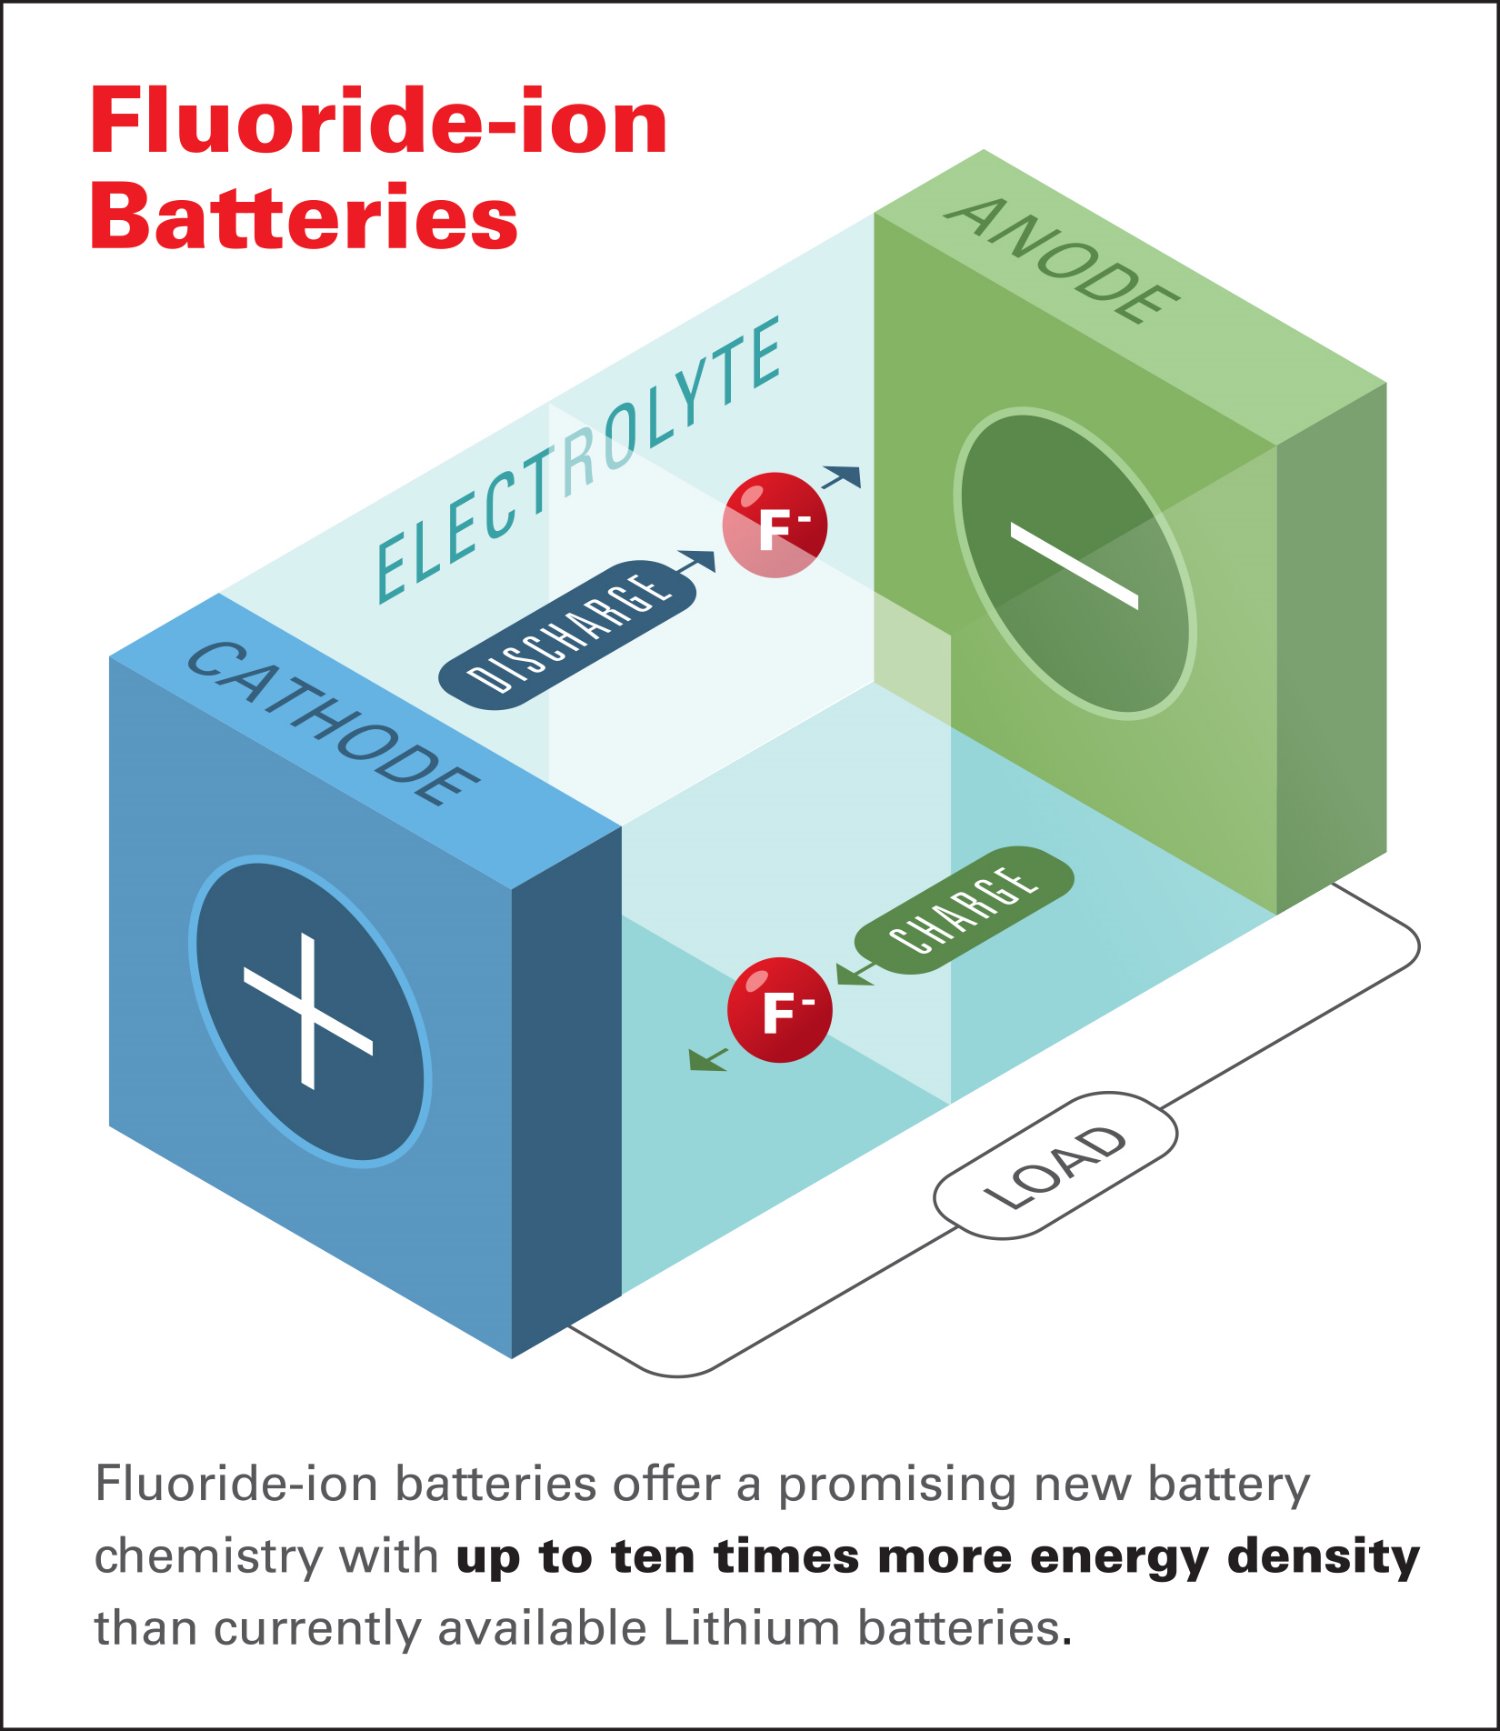 Honda Fluoride-ion battery